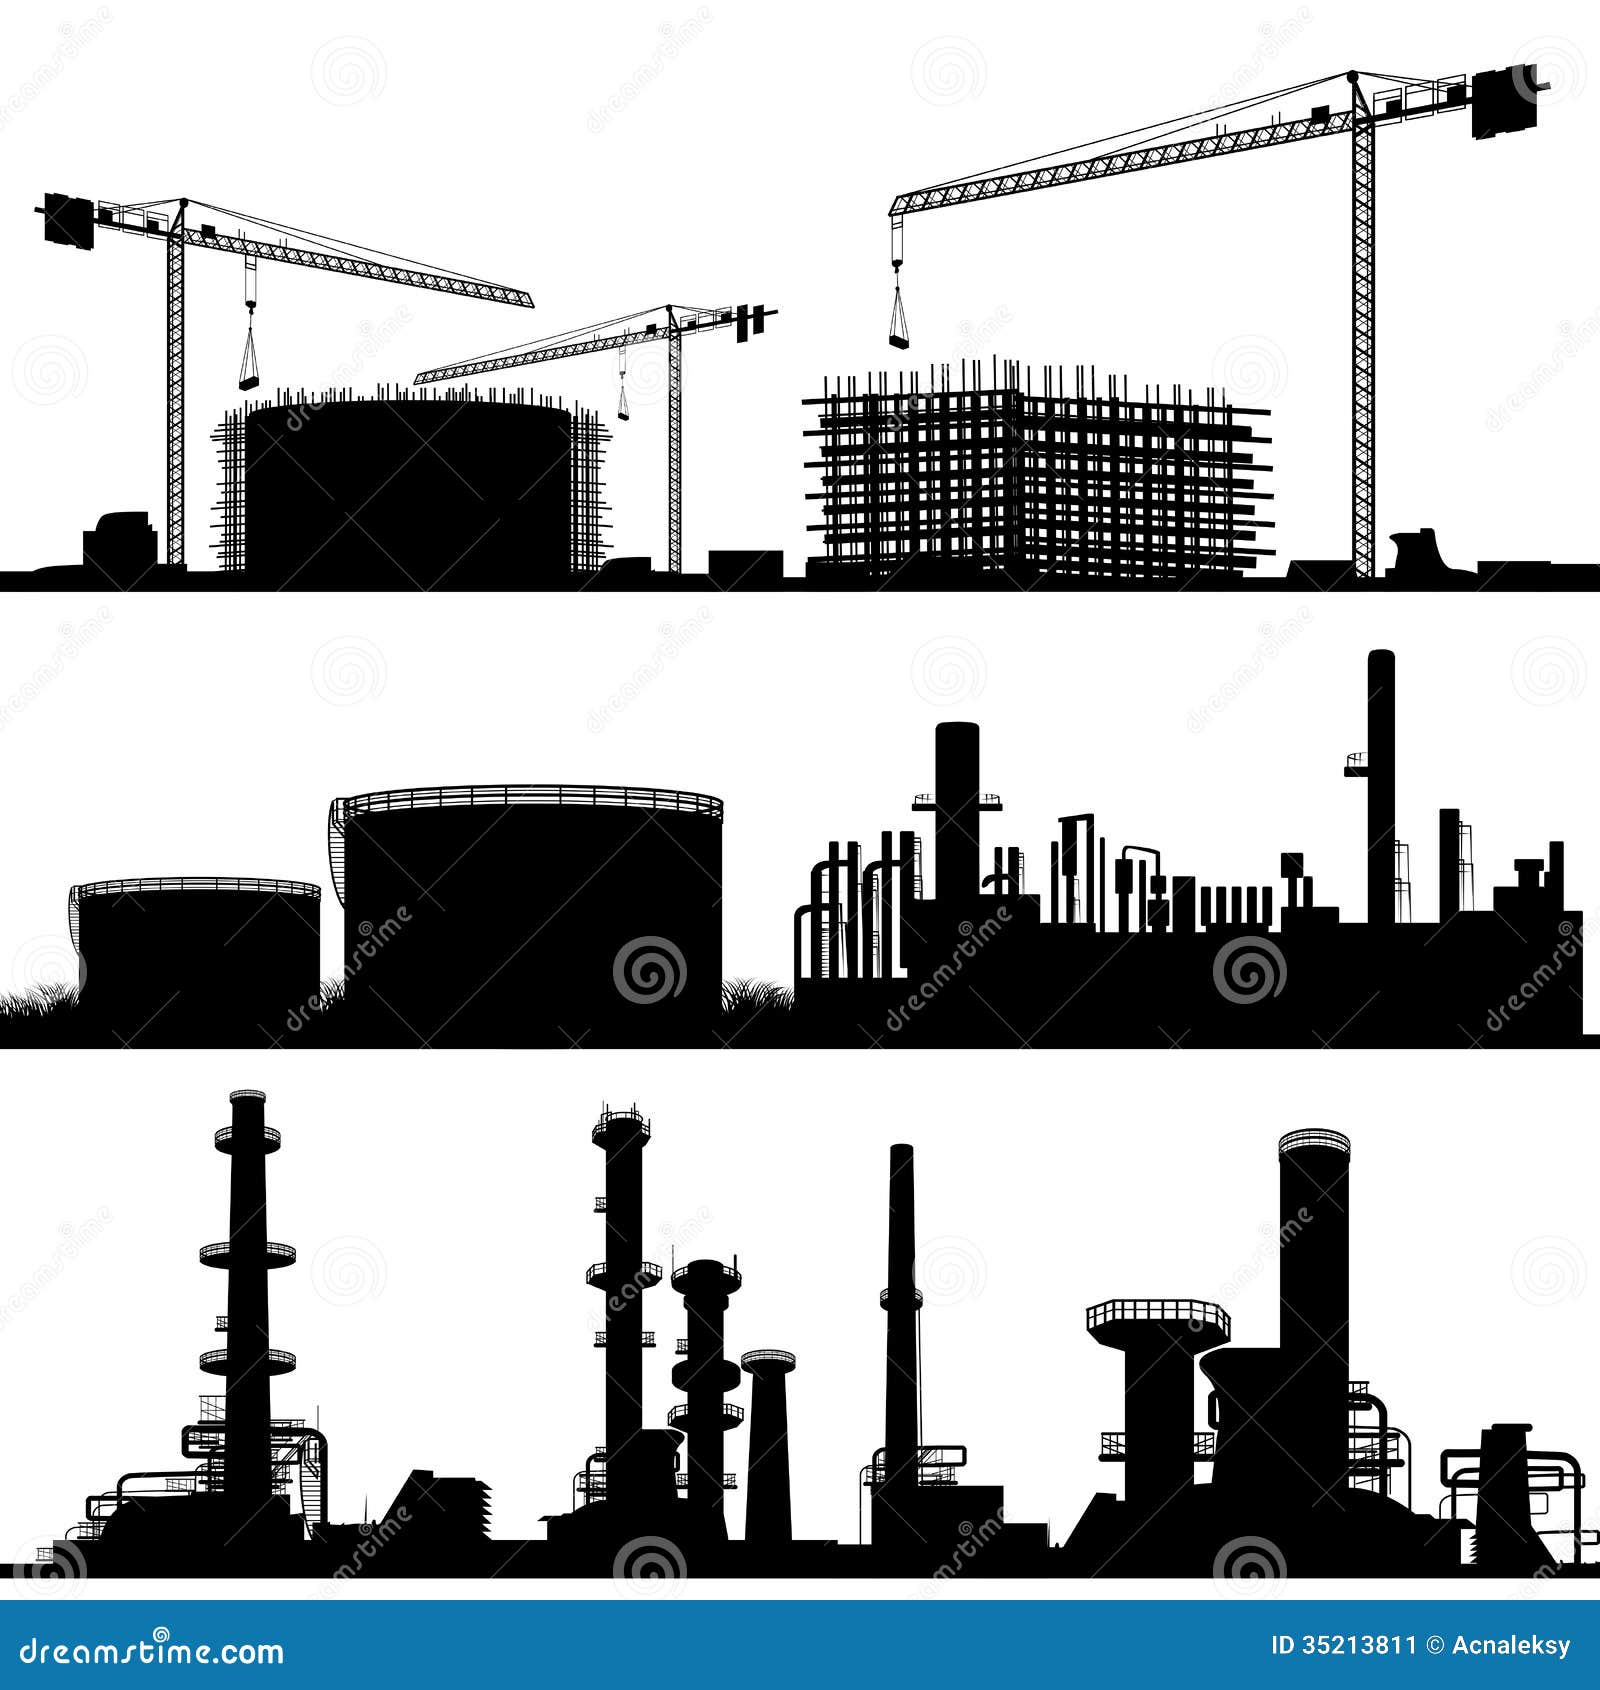 industrialization clipart - photo #18